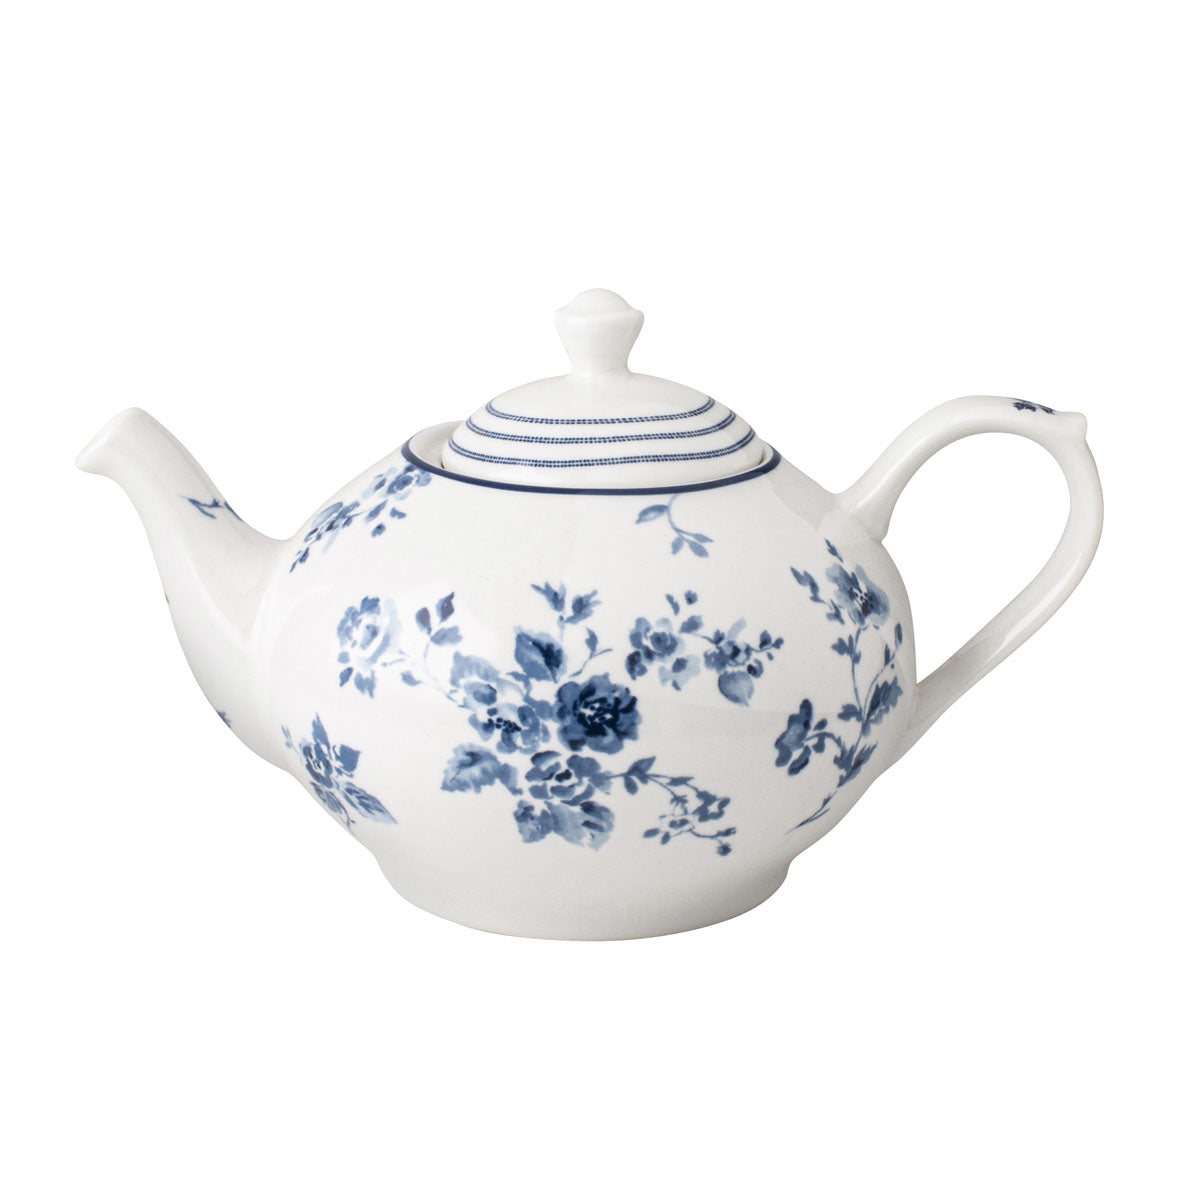 Laura Ashley Giftset Teapot China Rose 1,6 liter